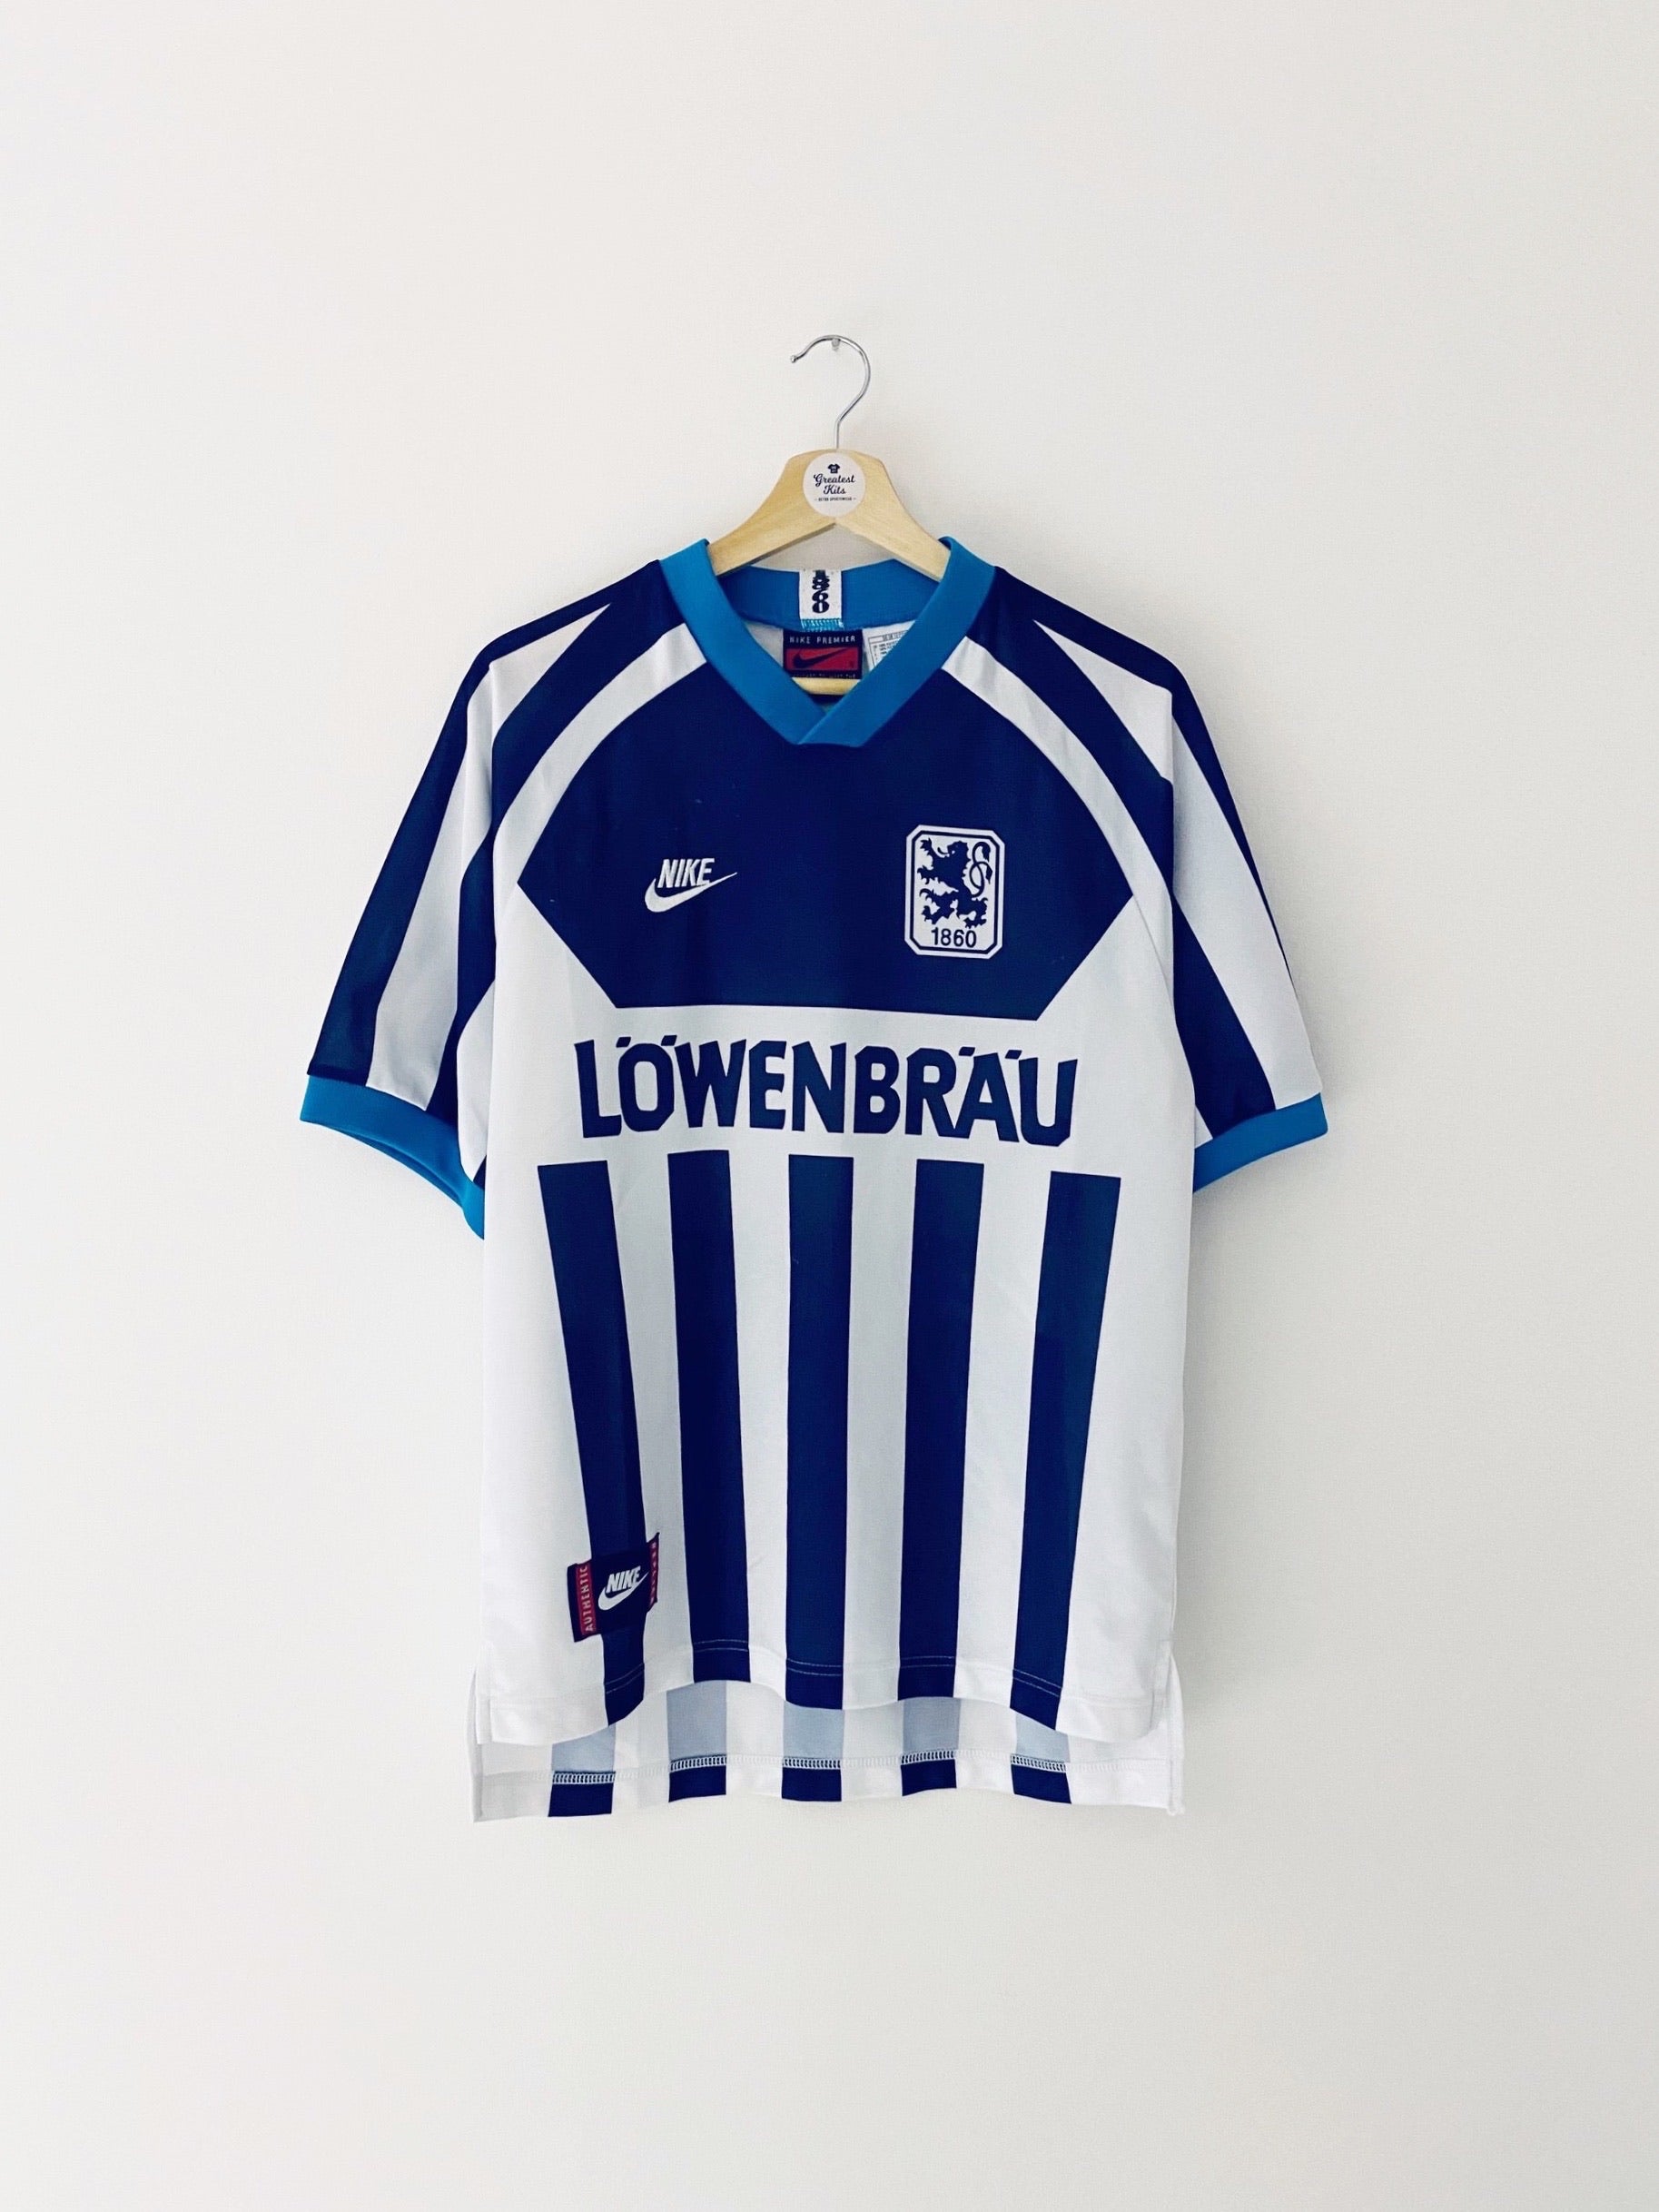 1995/96 Camiseta visitante de Múnich 1860 (S) 7/10